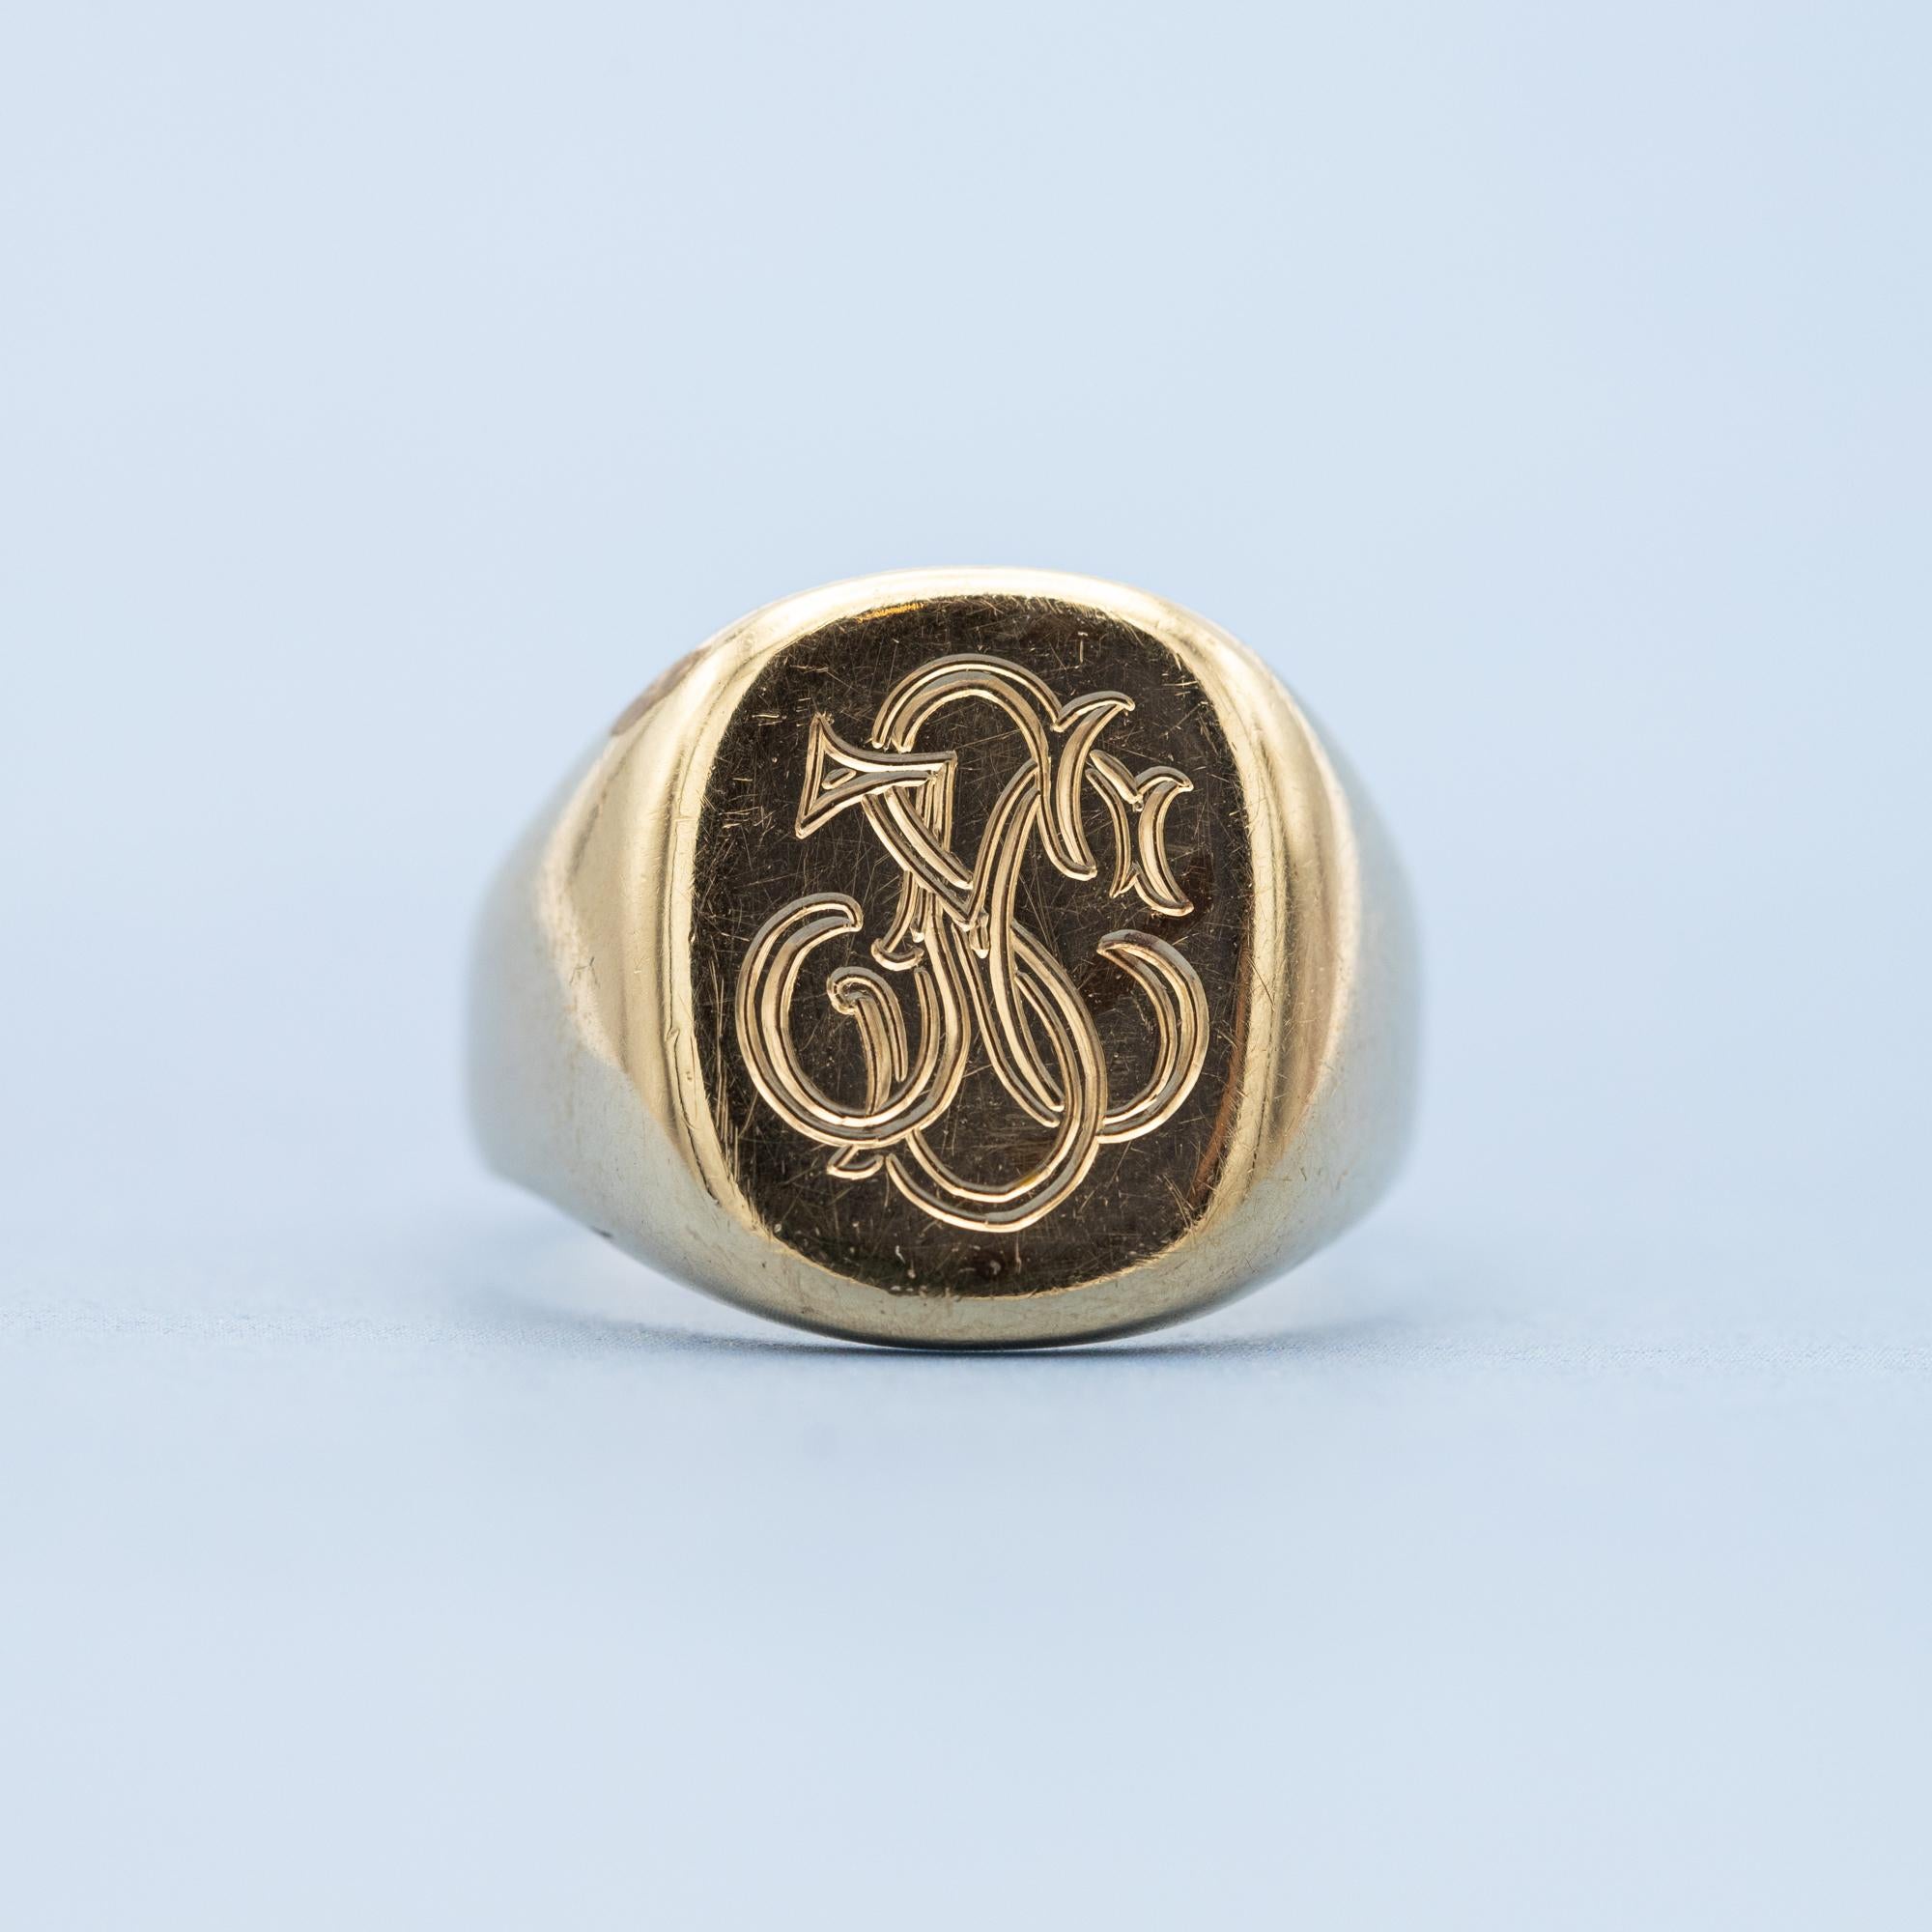 9k estate Initials J C S ring - letter signet monogram - Intaglio gentleman ring For Sale 1